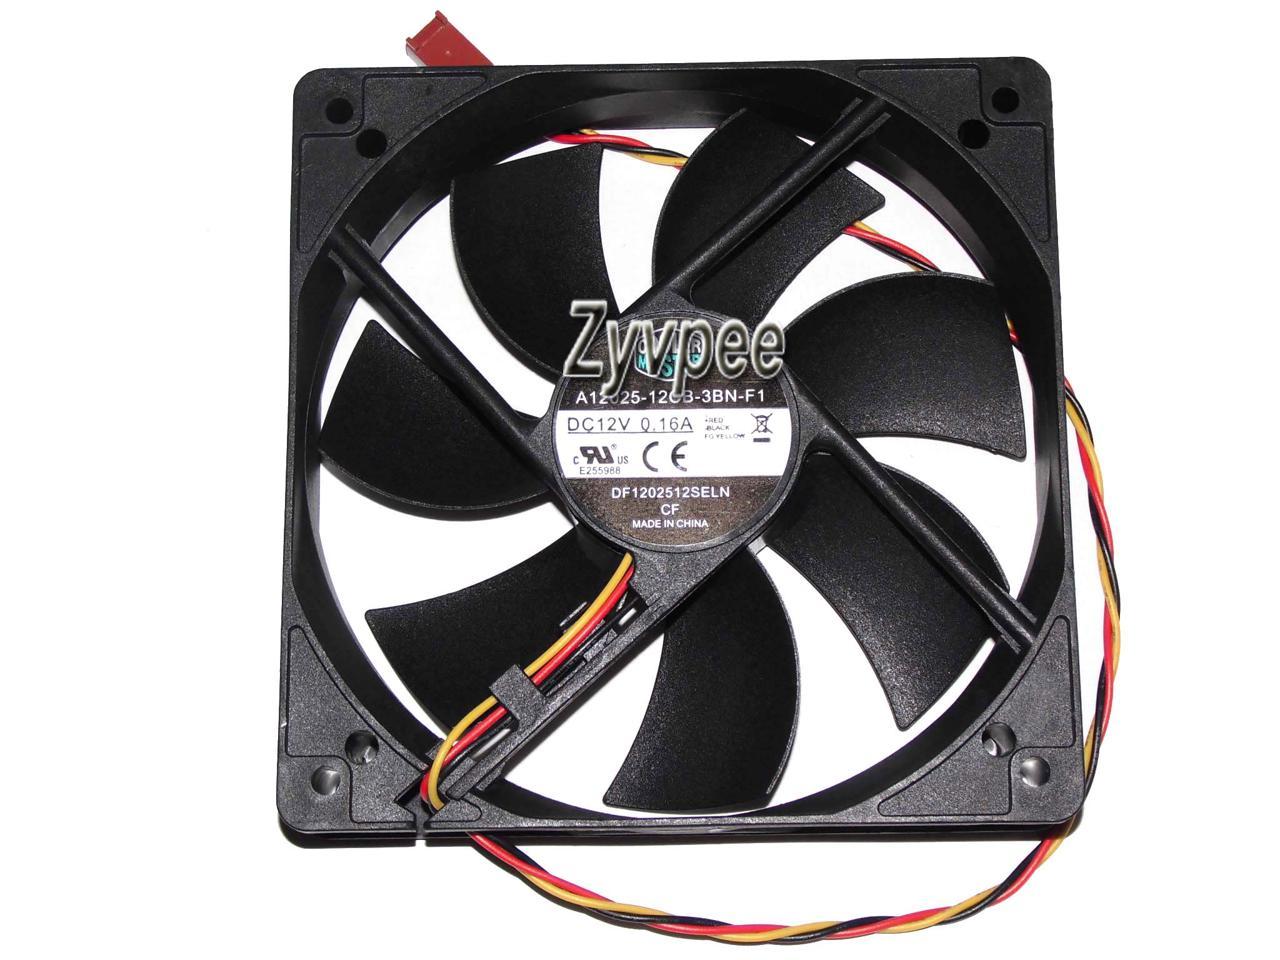 Cooler Master Internal Computer Heat Sync Fan A12025-12CB-3EN-F1 DC 12V 0.16A 